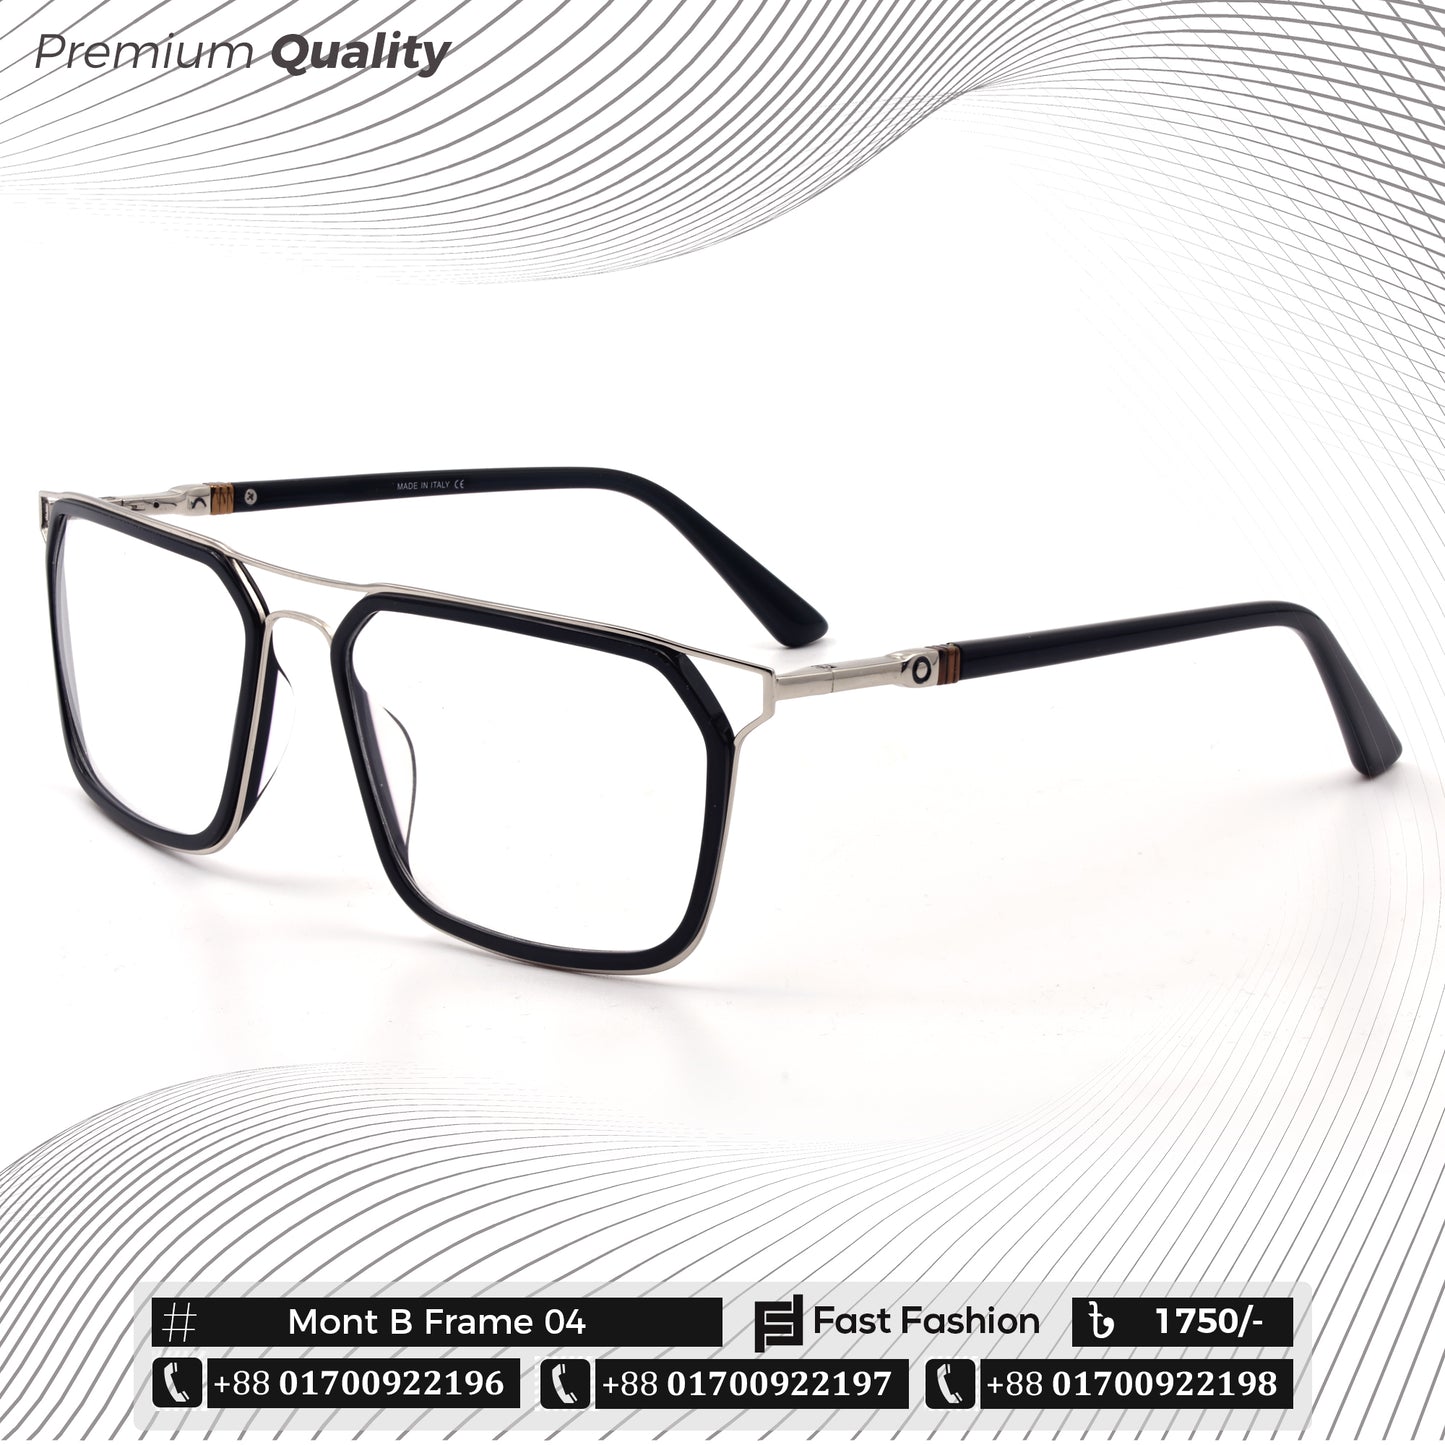 Trendy Stylish Optic Frame | Mont B Frame 04 | Premium Quality